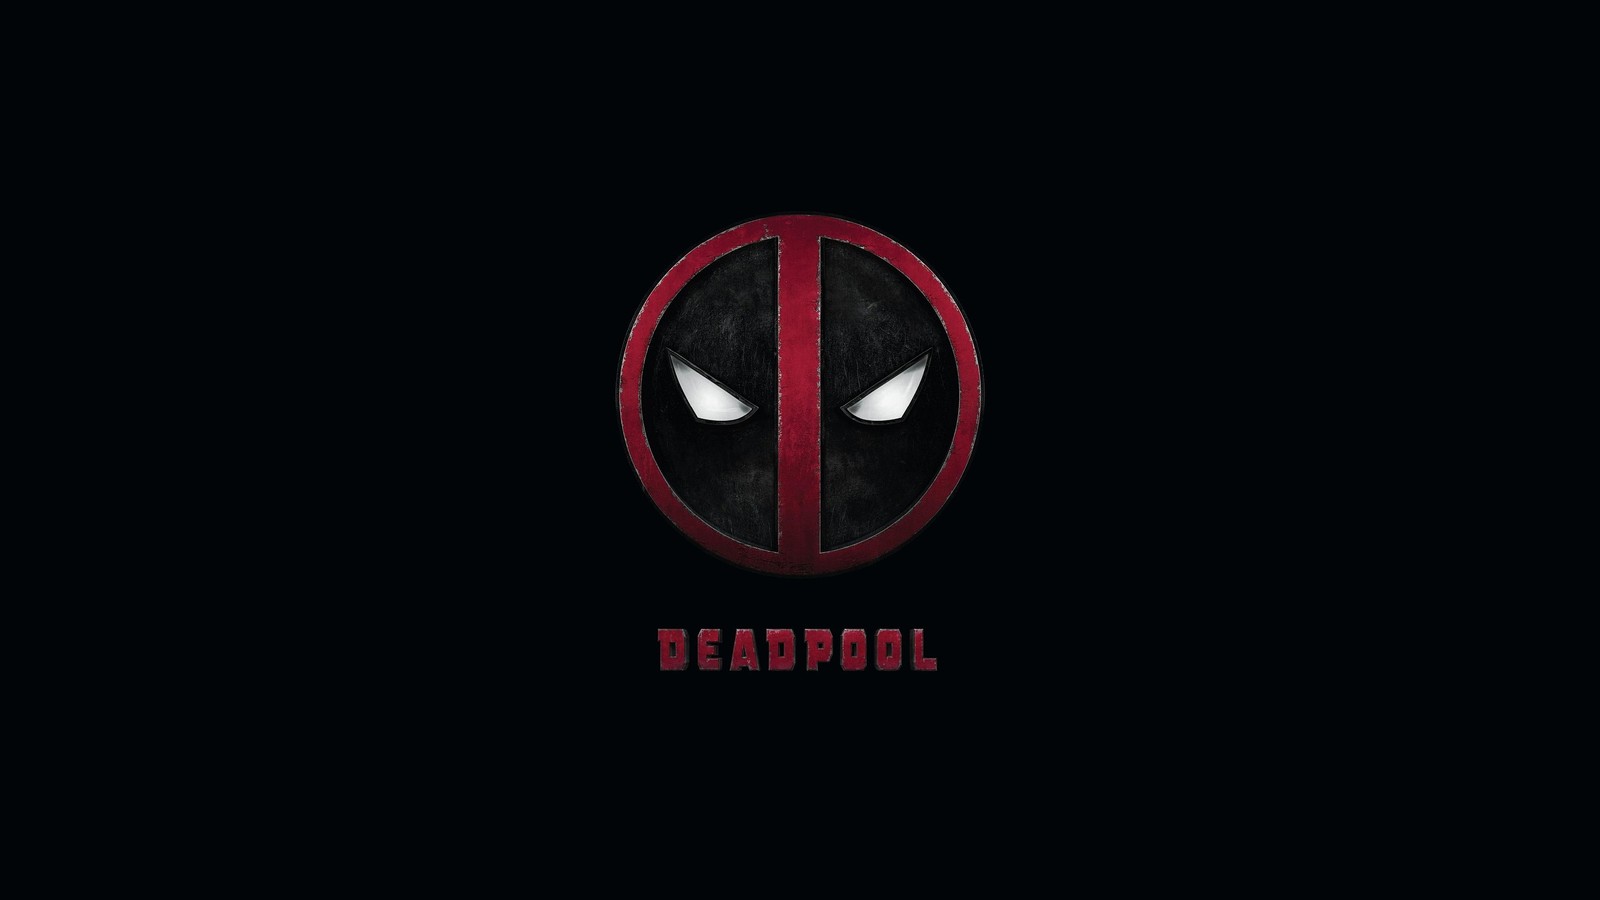 Deadpool logo 4k movie wallpaper 2016 3840x2160 1600x900